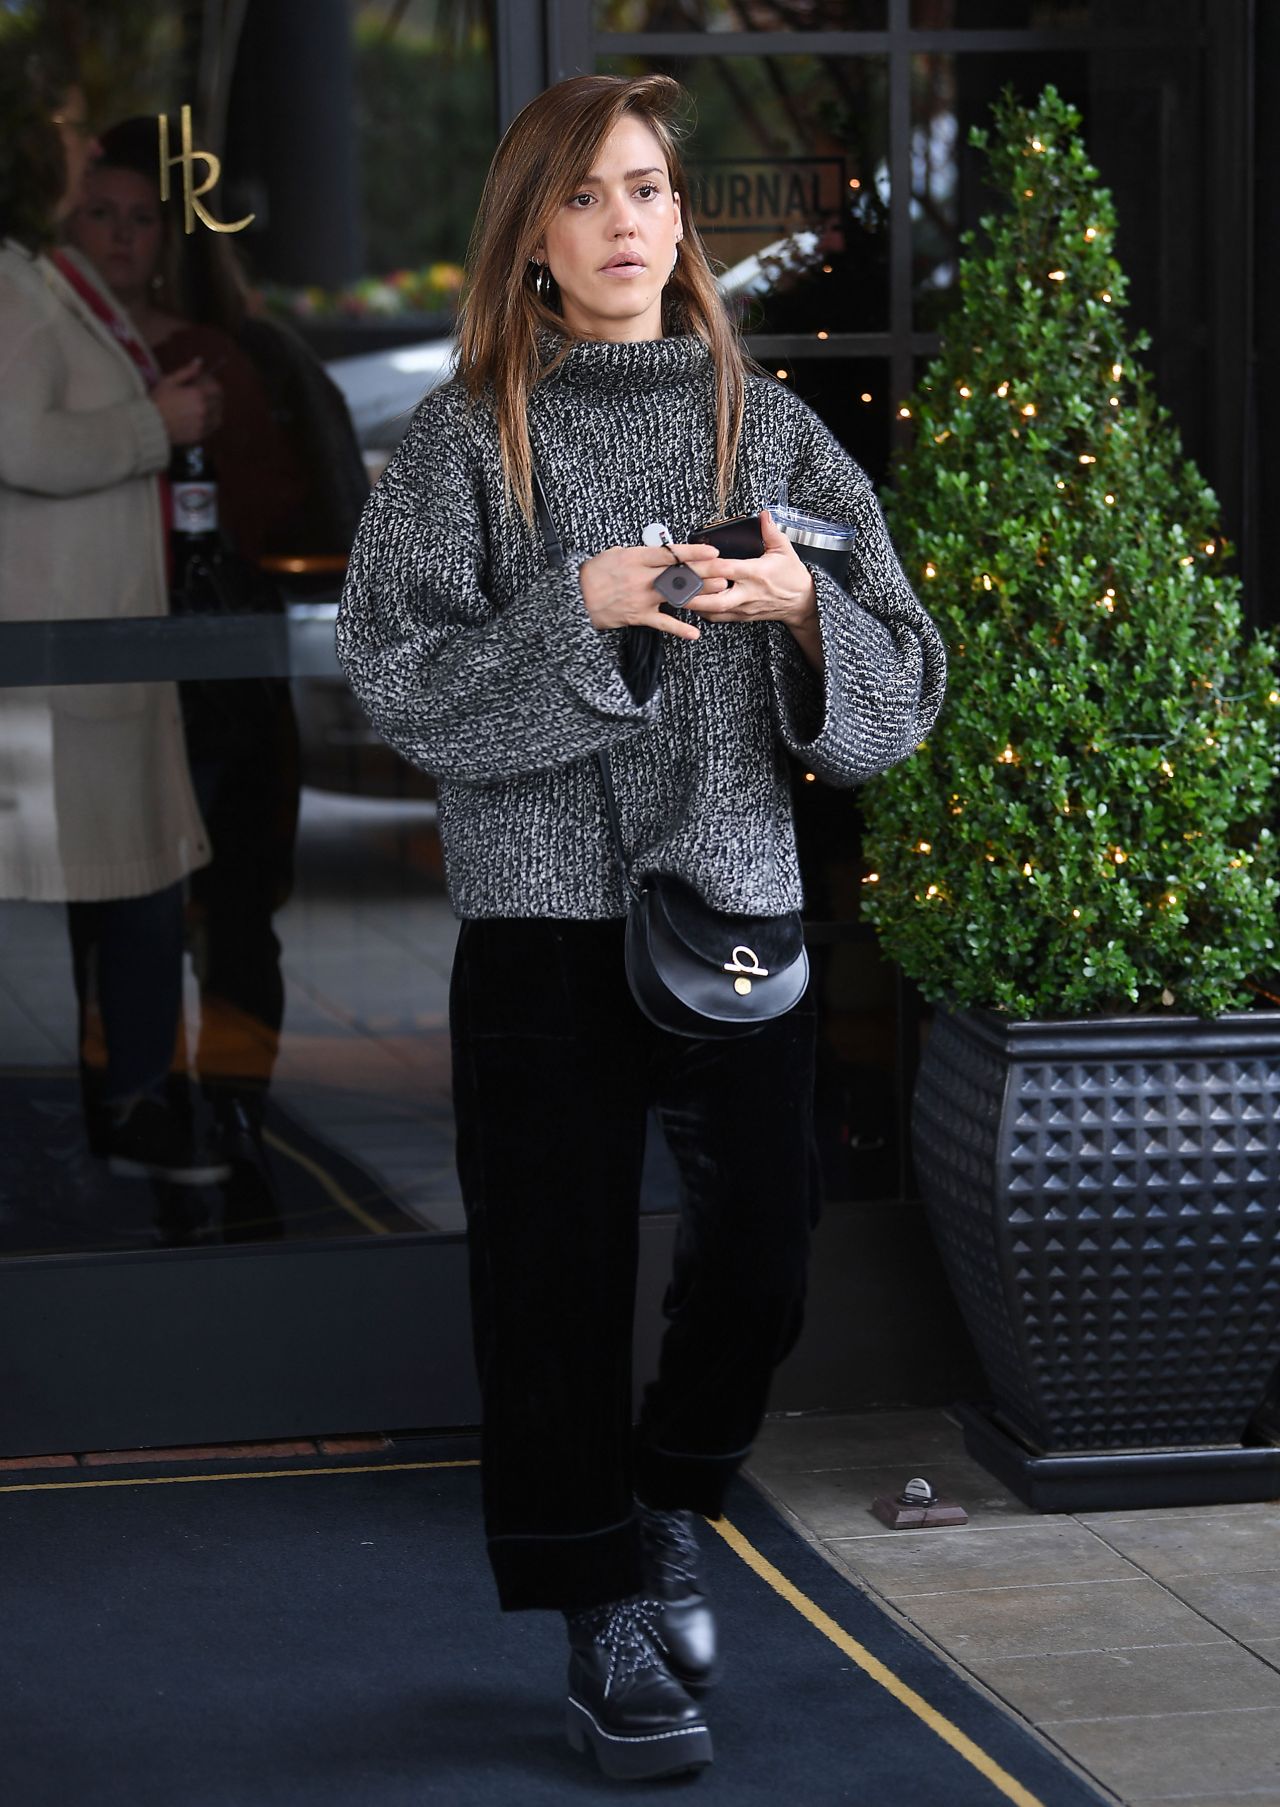 Jessica Alba at Roosevelt Hotel on Hollywood Blvd in LA 03/11/20191280 x 1807